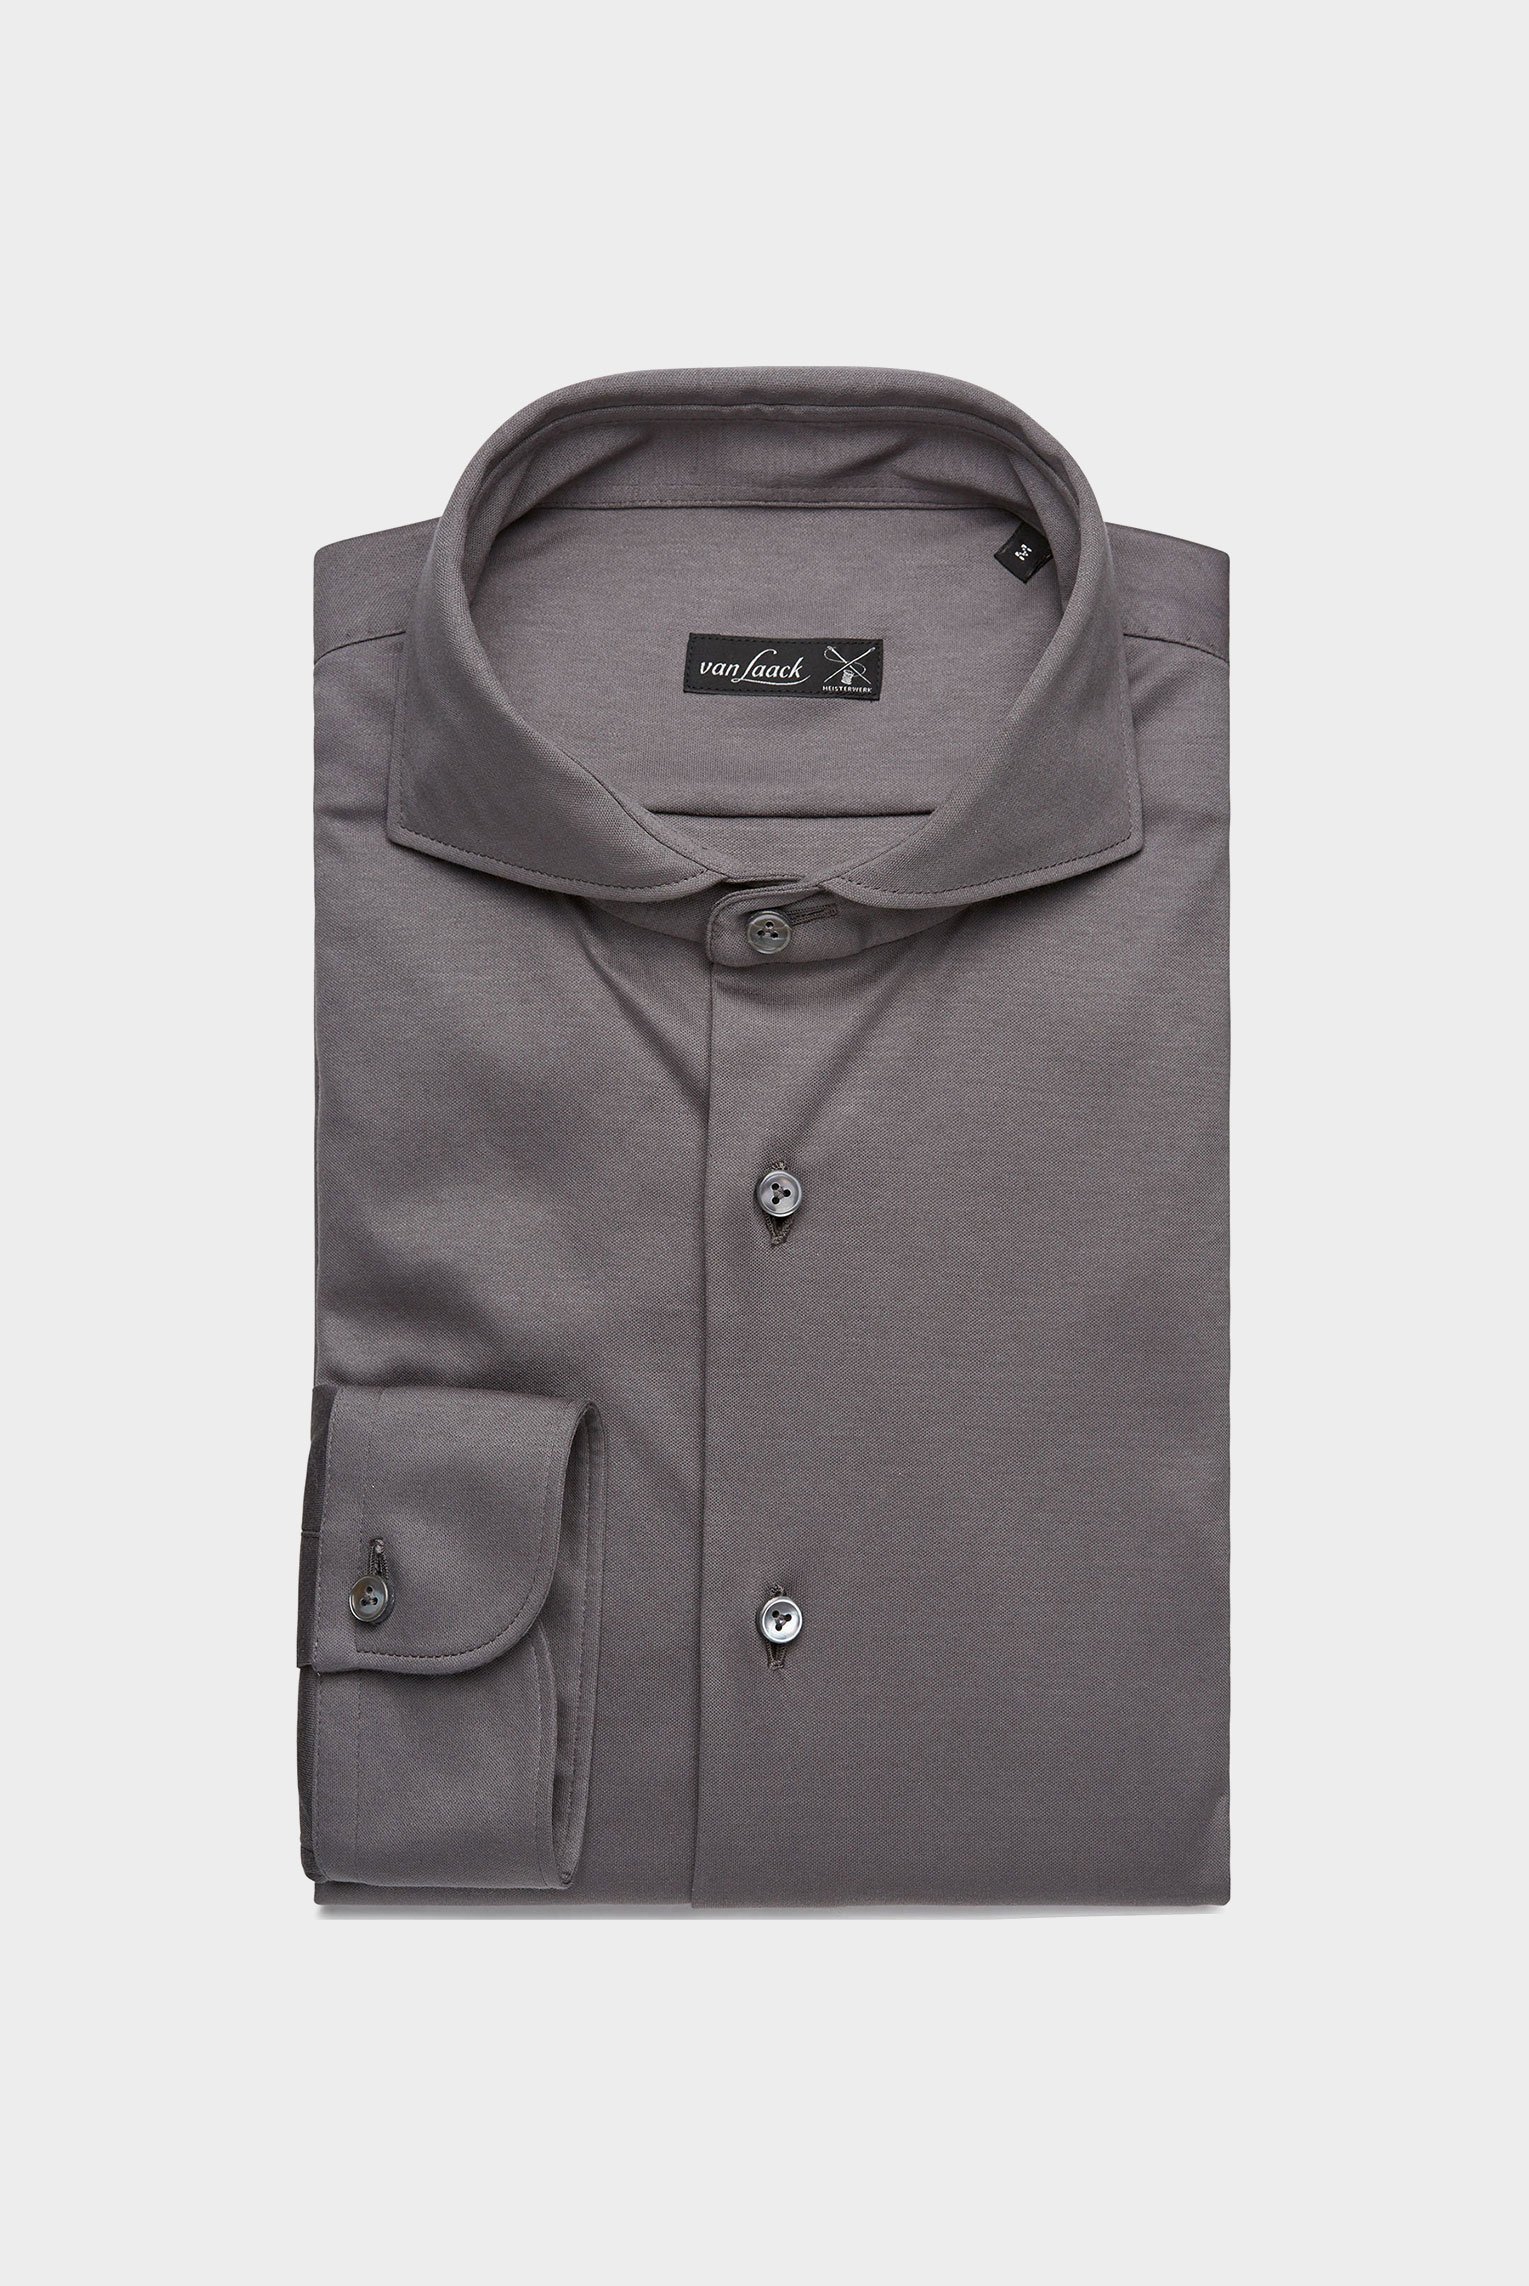 Casual Hemden+Jersey Hemd aus Schweizer Baumwolle Tailor Fit+20.1683.UC.180031.070.X3L